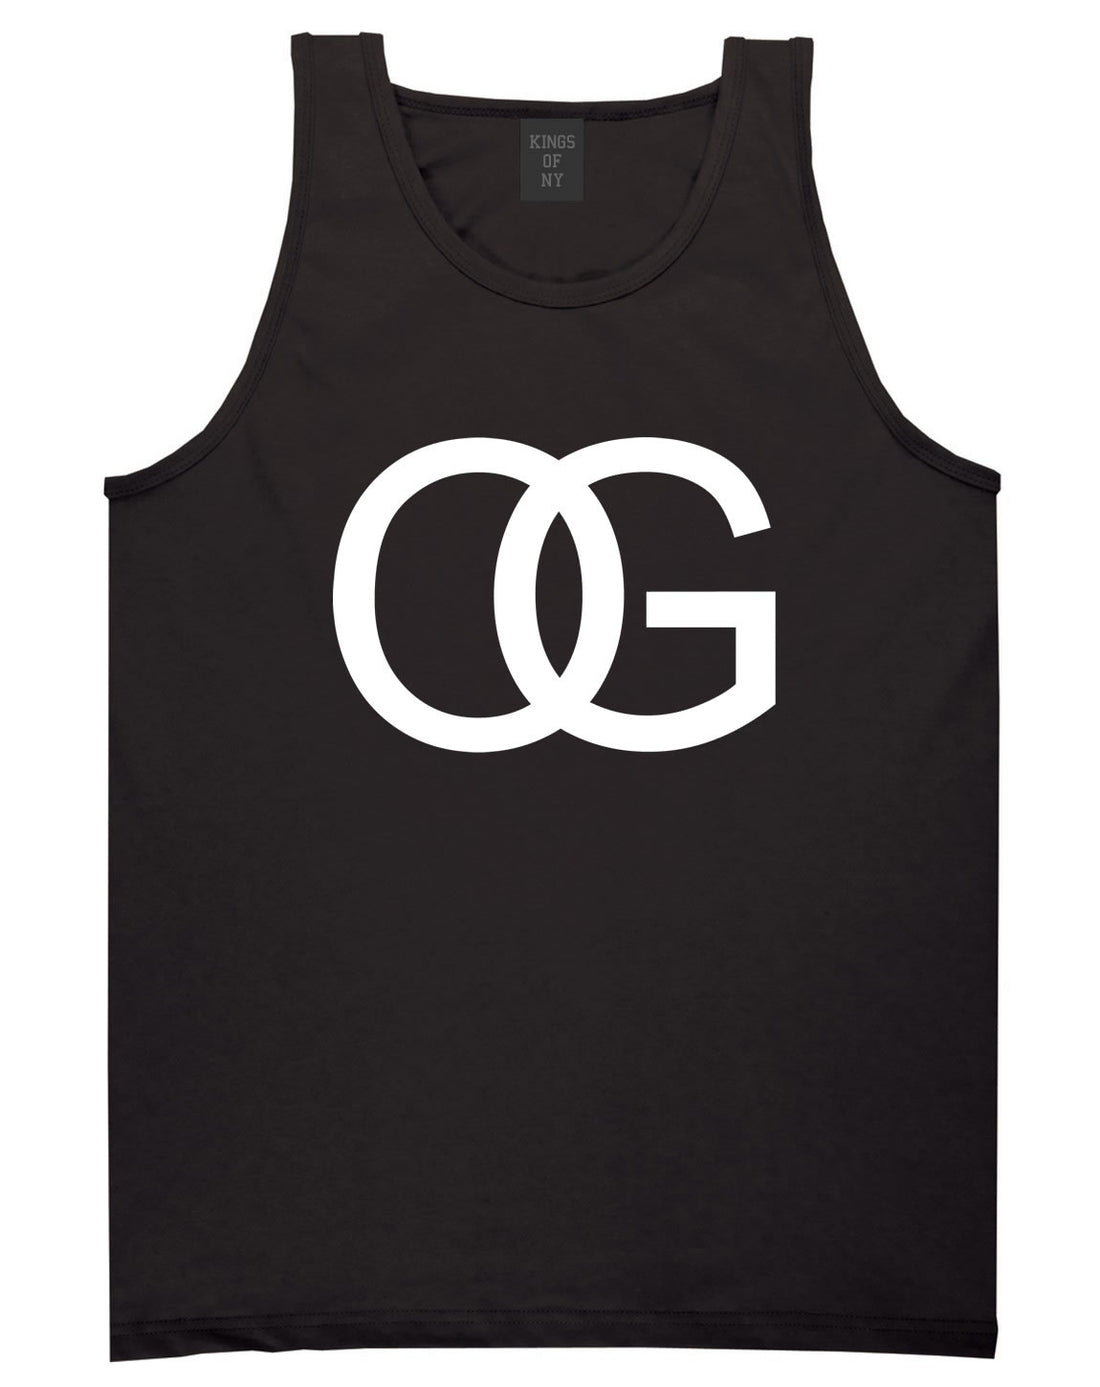 OG Original Gangsta Gangster Style Green Tank Top In Black by Kings Of NY